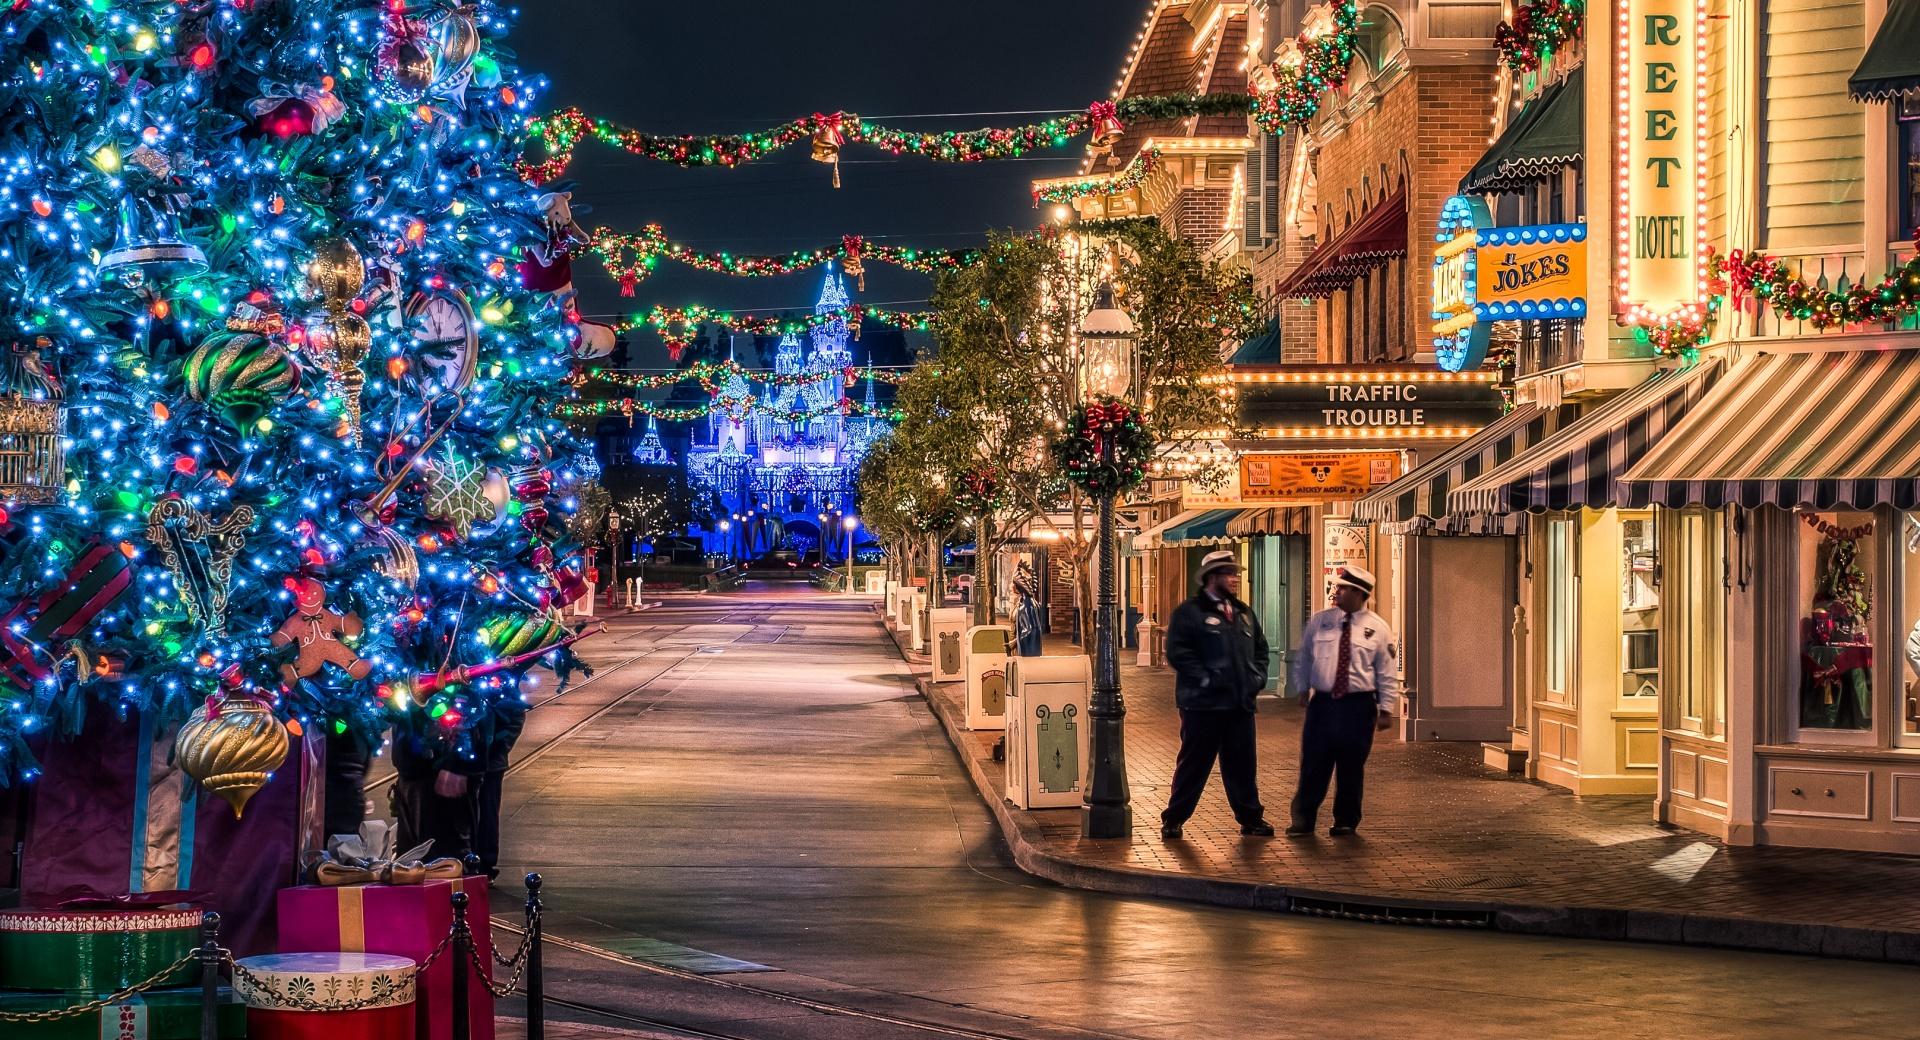 Disneyland Christmas Tree at 1024 x 1024 iPad size wallpapers HD quality